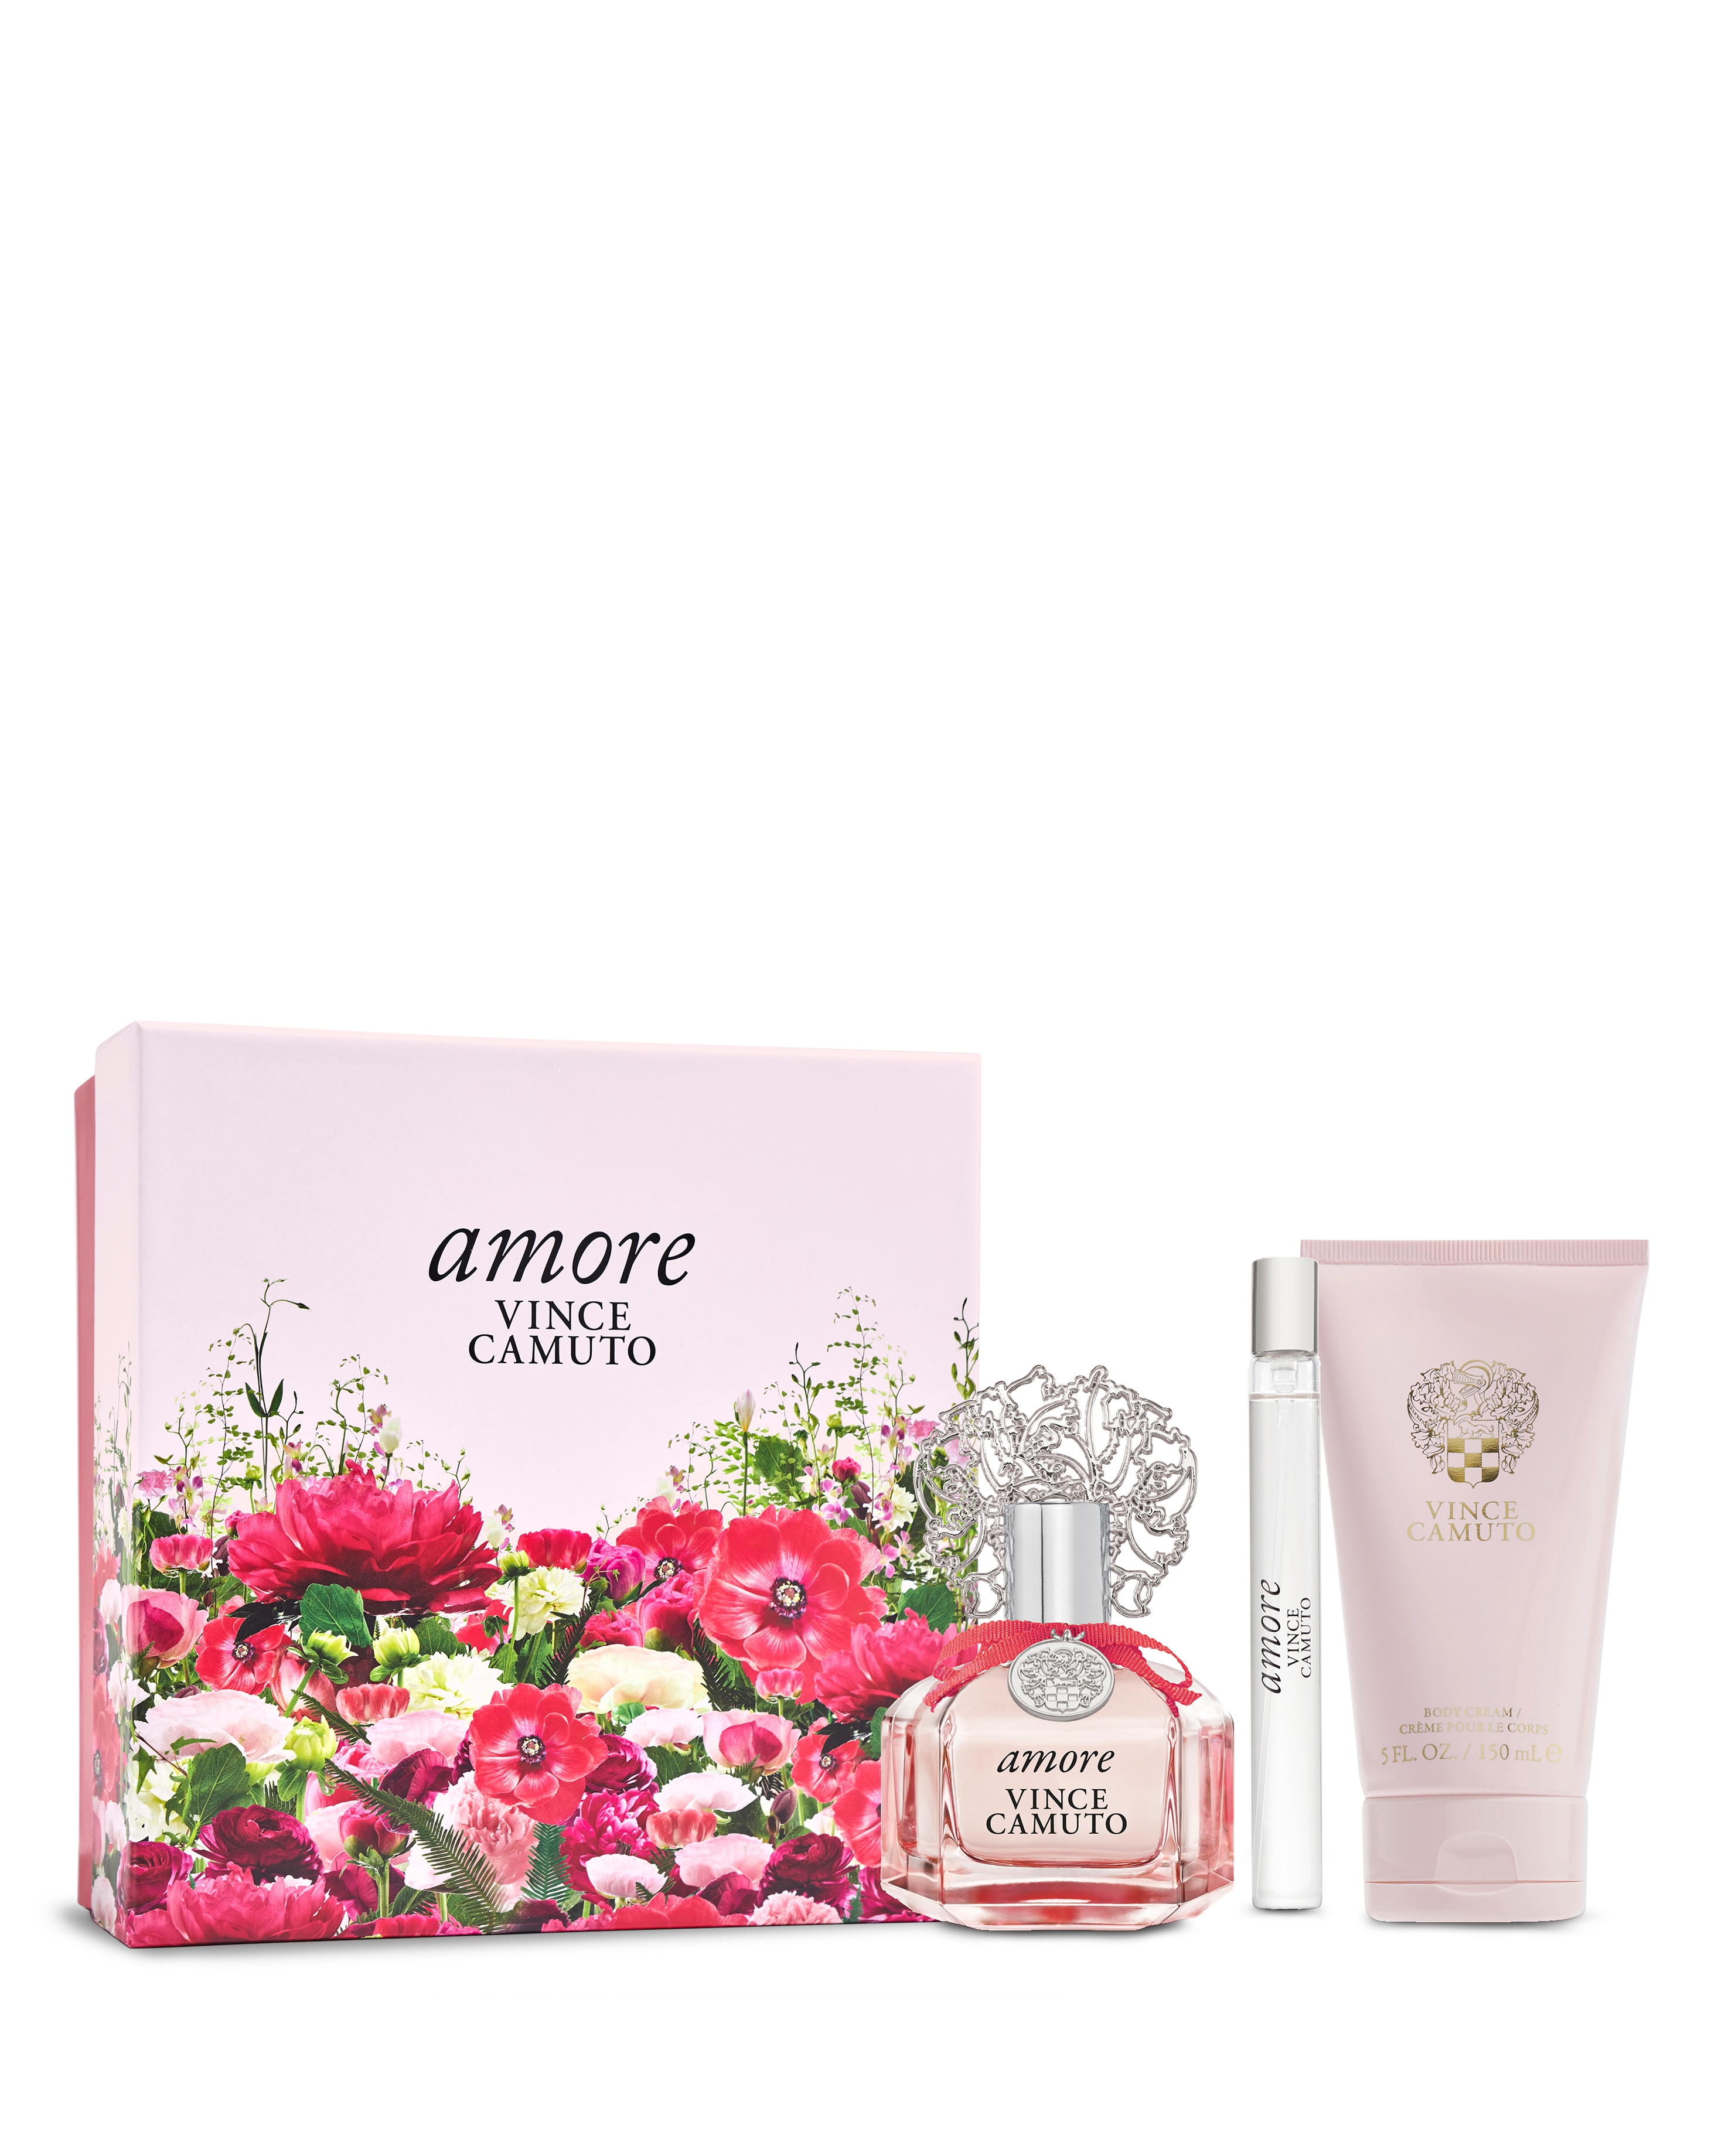 X3 Vince Camuto Amore Eau de Parfum Spray Sample Vial Travel 0.09 oz/2.6 ml  New